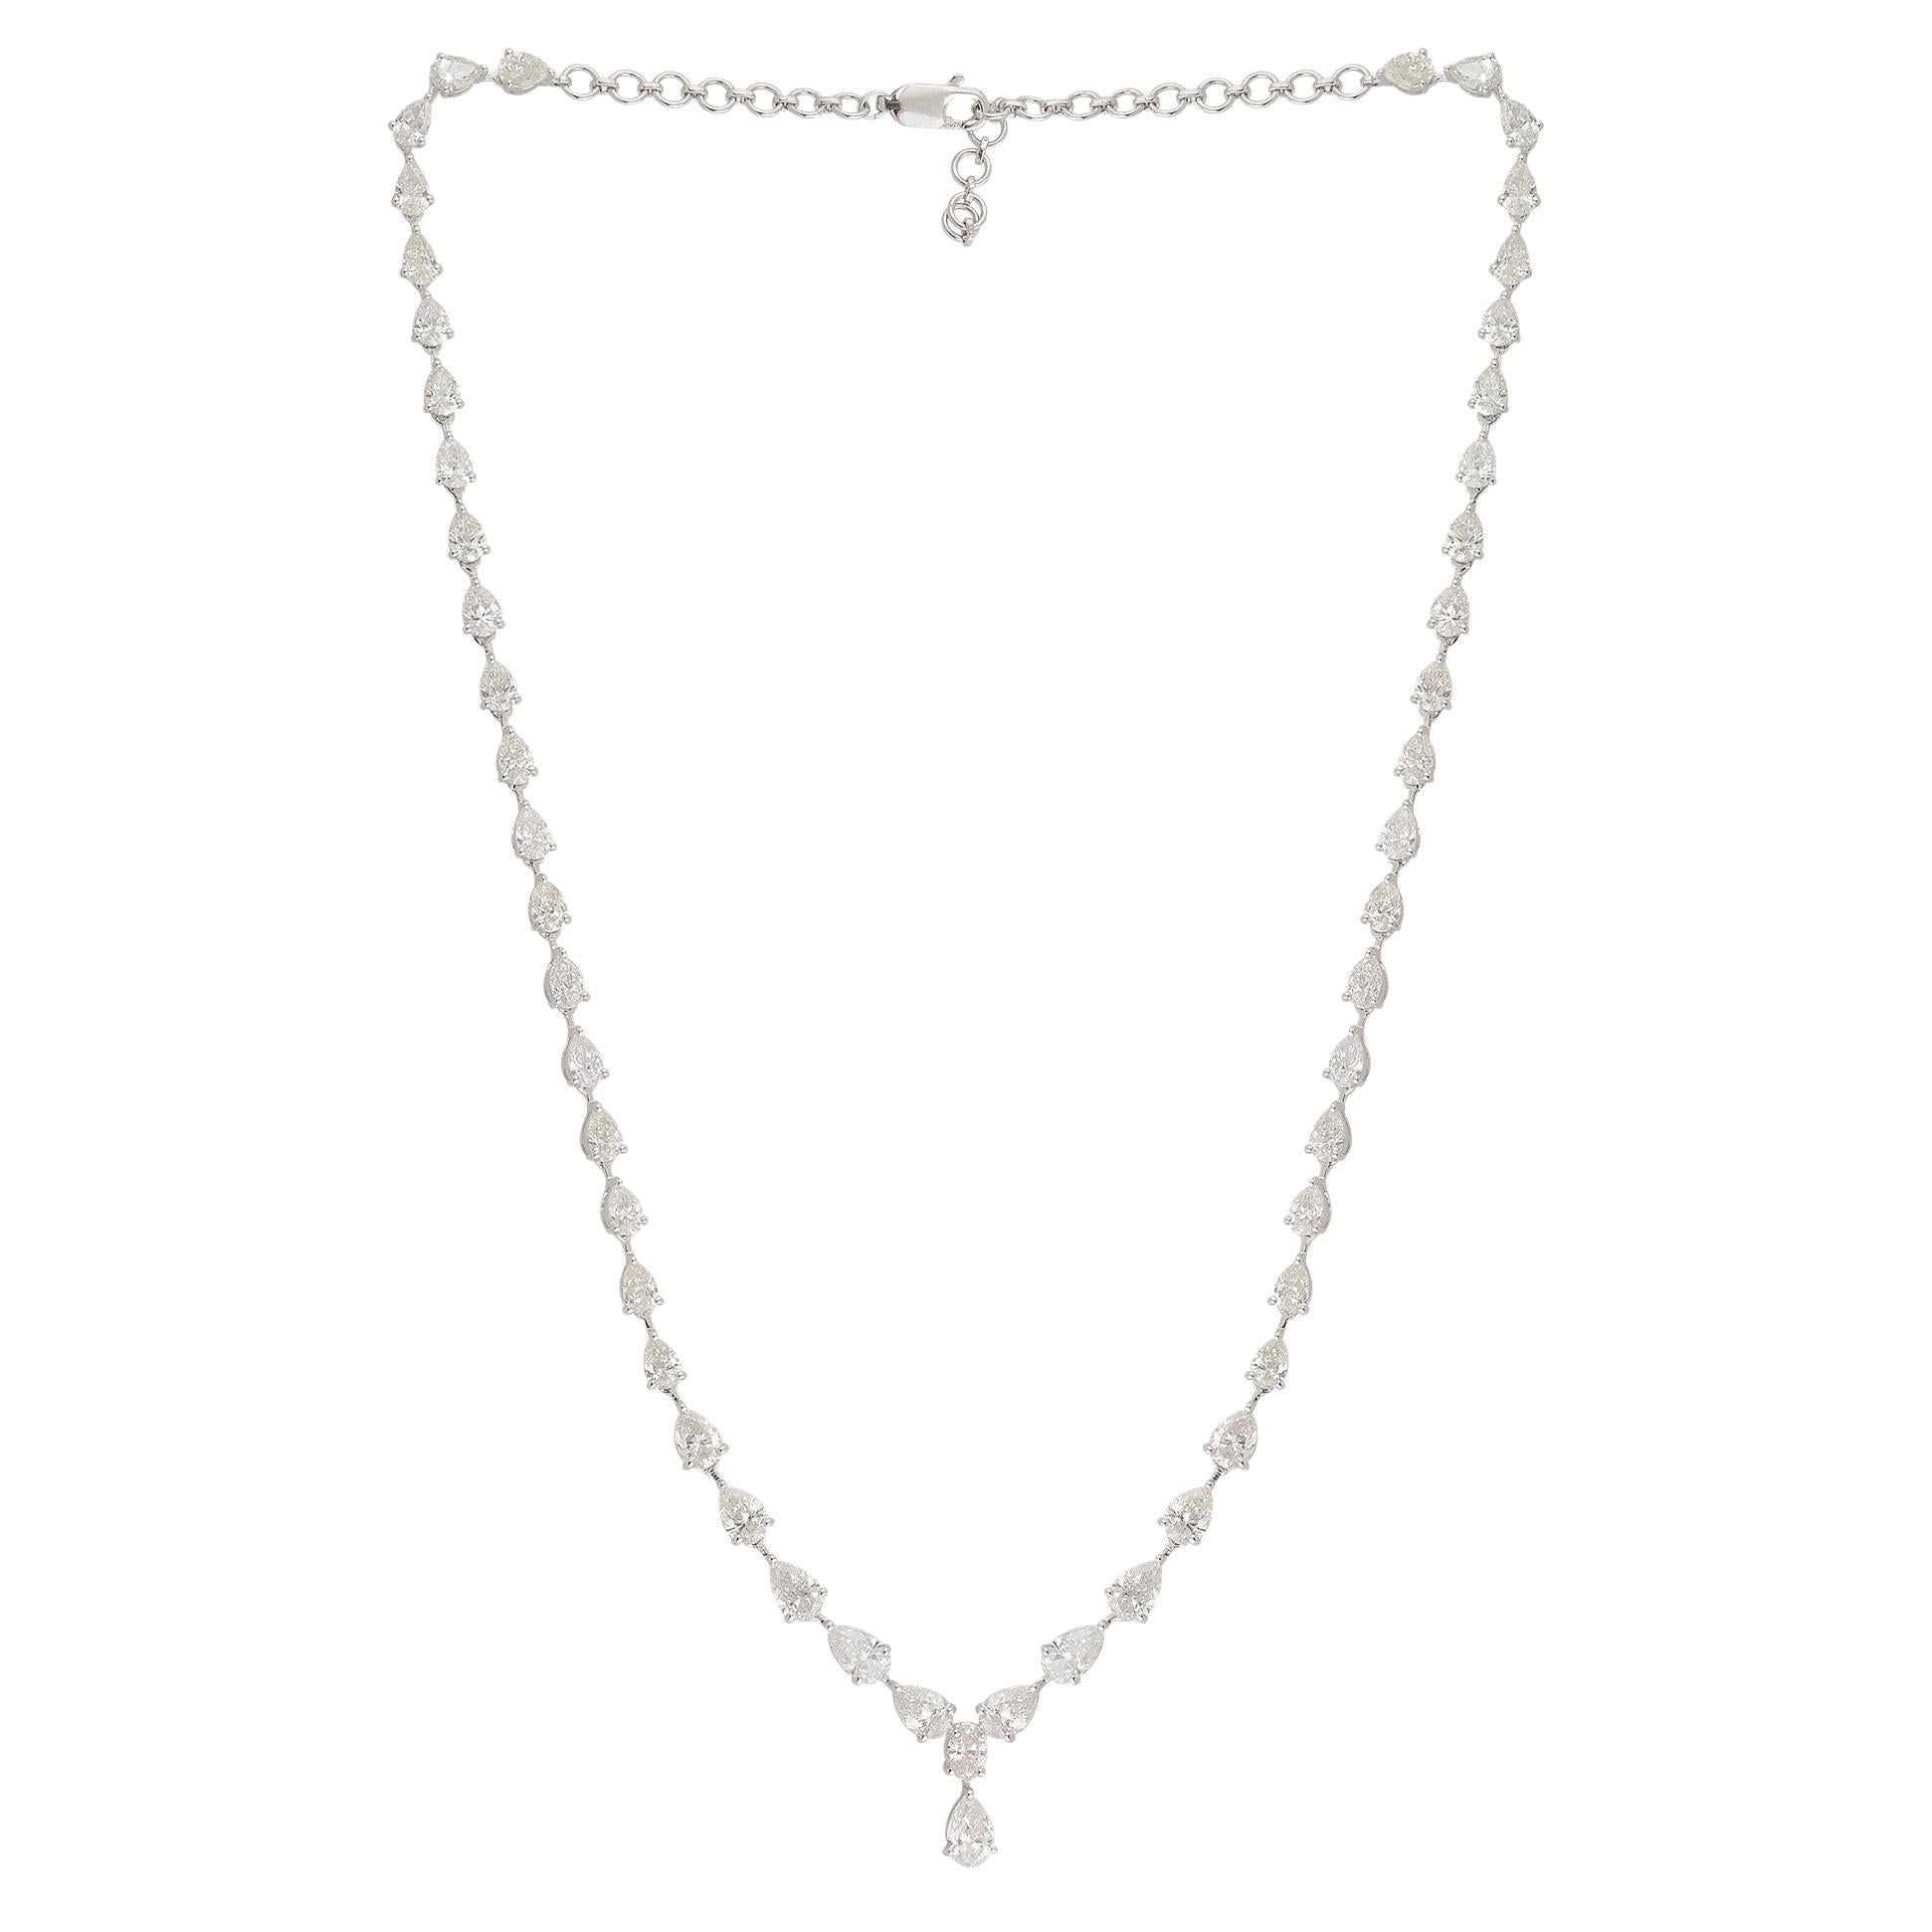 12.40 Carat Pear Diamond Charm Necklace 18 Karat White Gold Handmade Jewelry For Sale